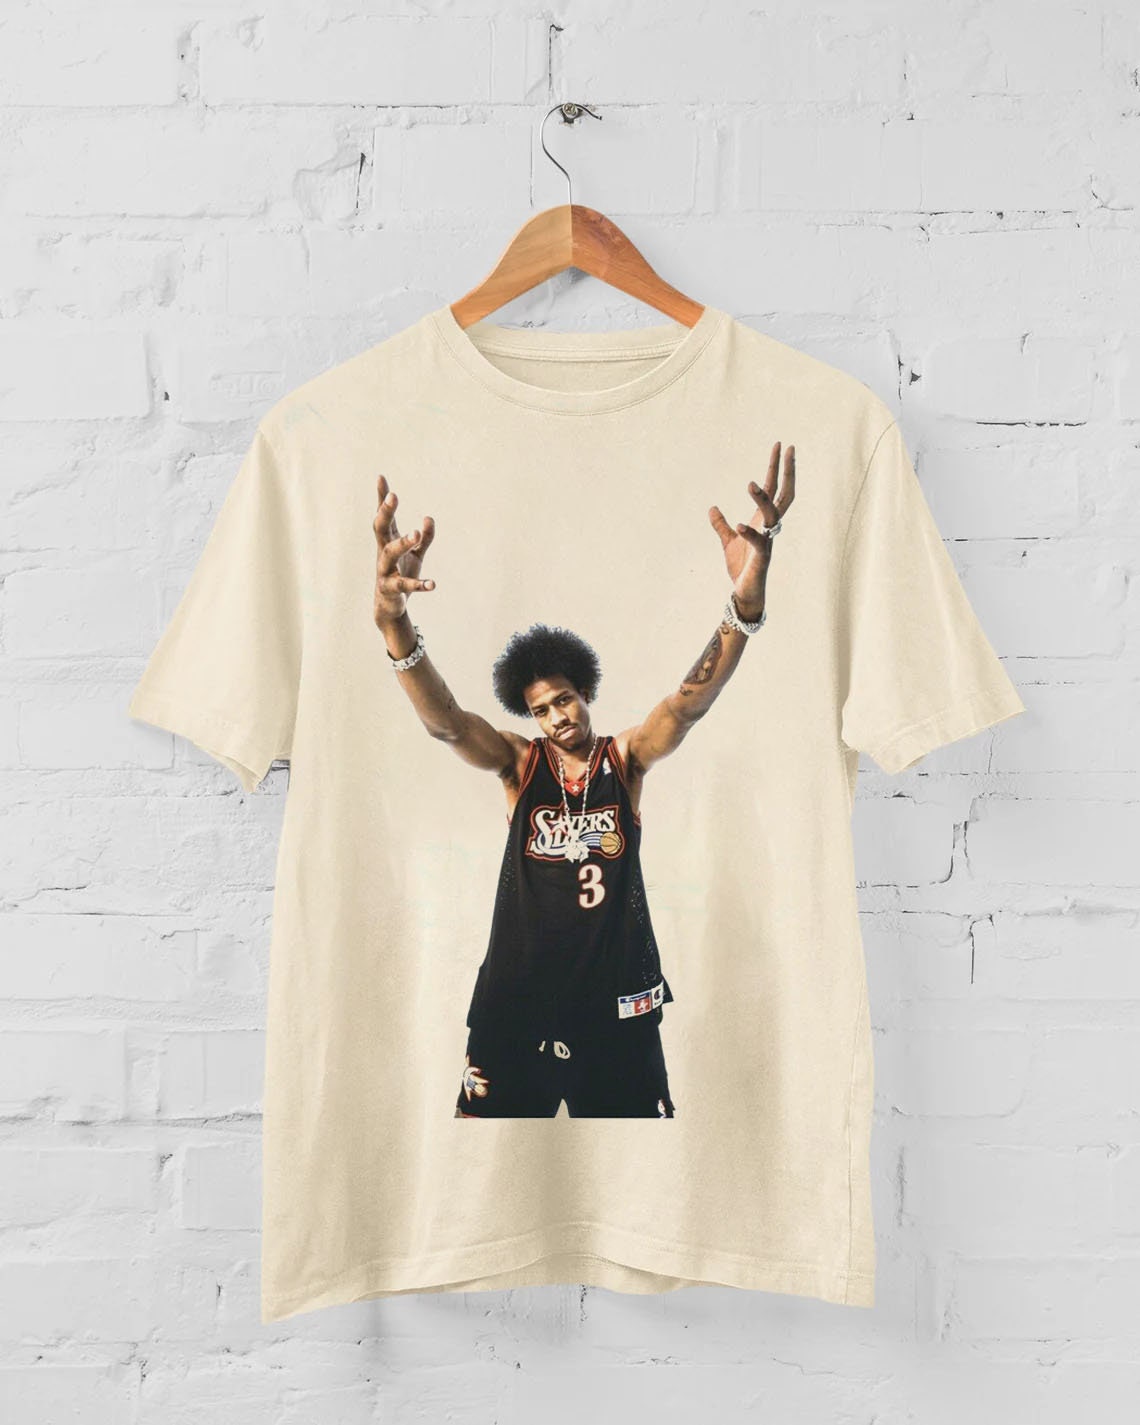 Allen Iverson T-Shirt Vintage 90s Basketball Kobe Bryant T shirt Sizes S -  2XL